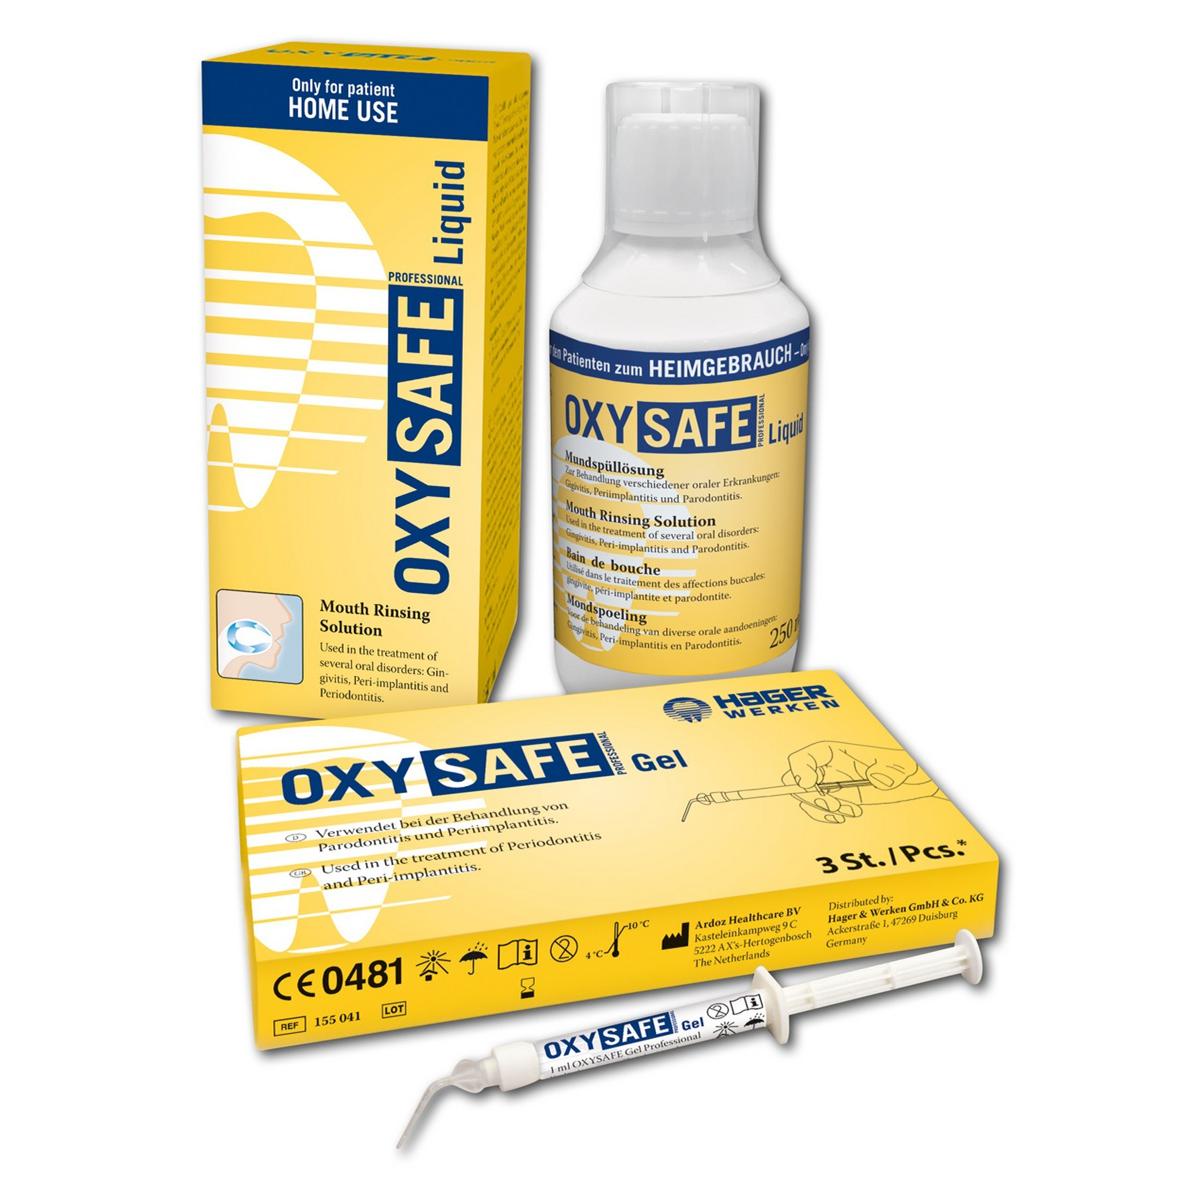 OXYSAFE Professional - OXYSAFE Professional Liquid, 250 ml